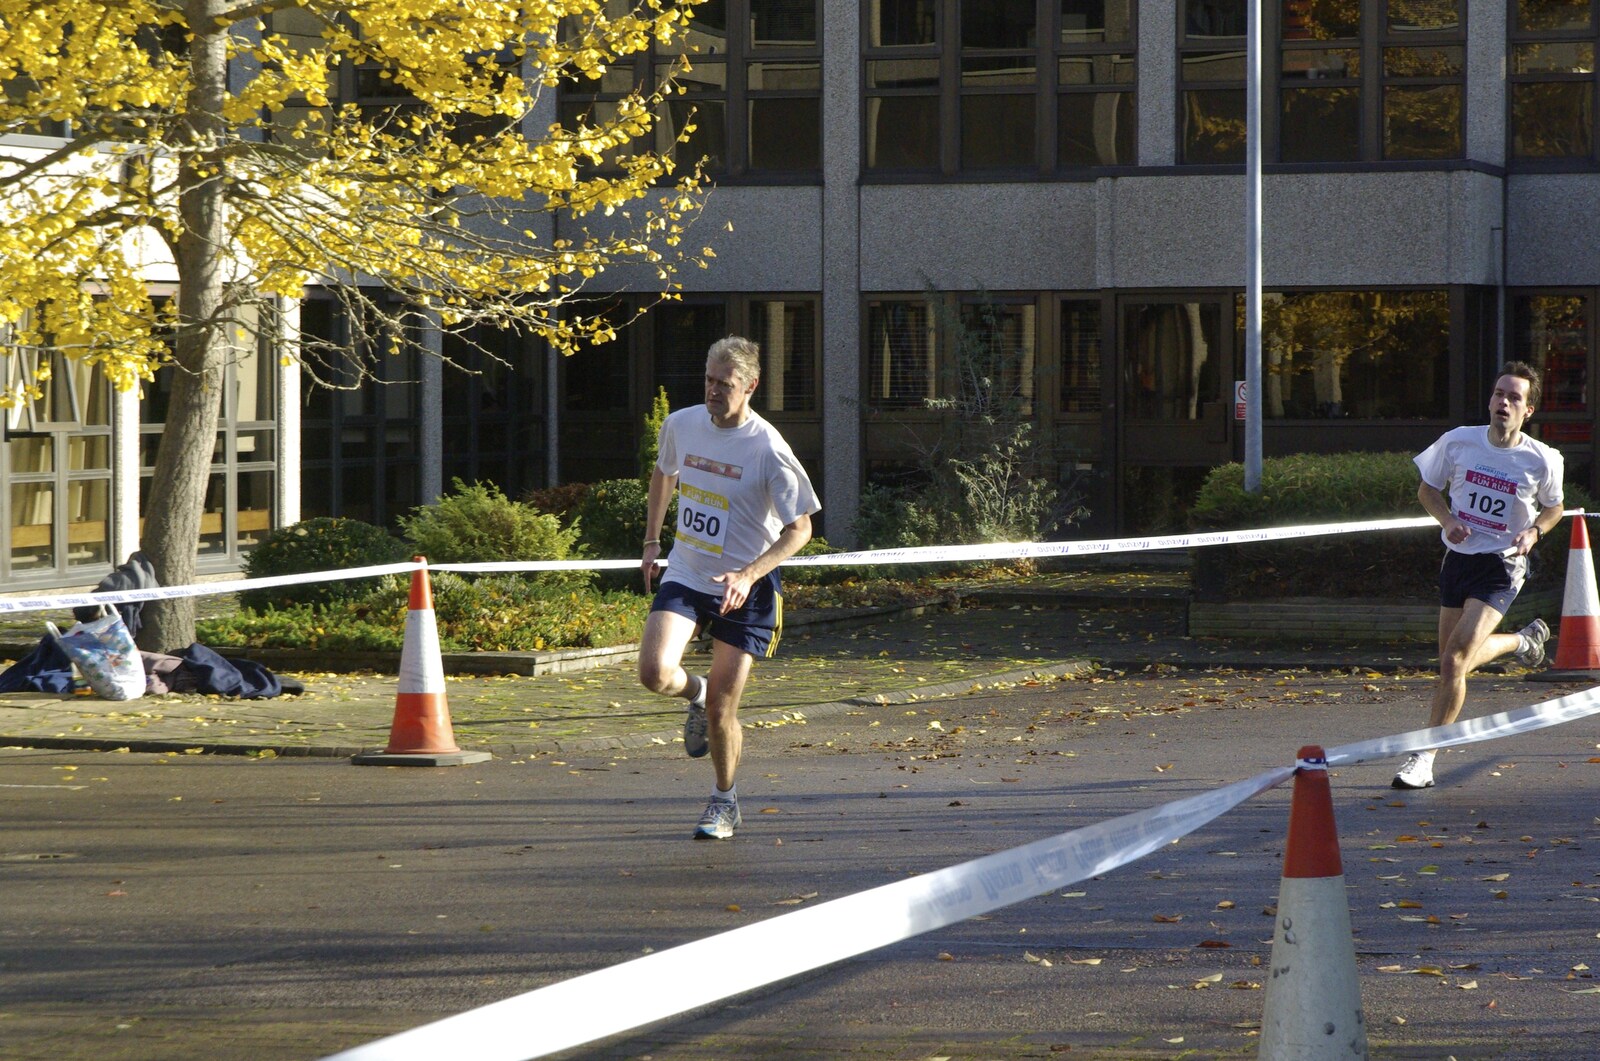 The Cambridge Fun Run, Milton Road, Cambridge - 14th November 2008: Steve comes in from his run, in a little over 6 minutes